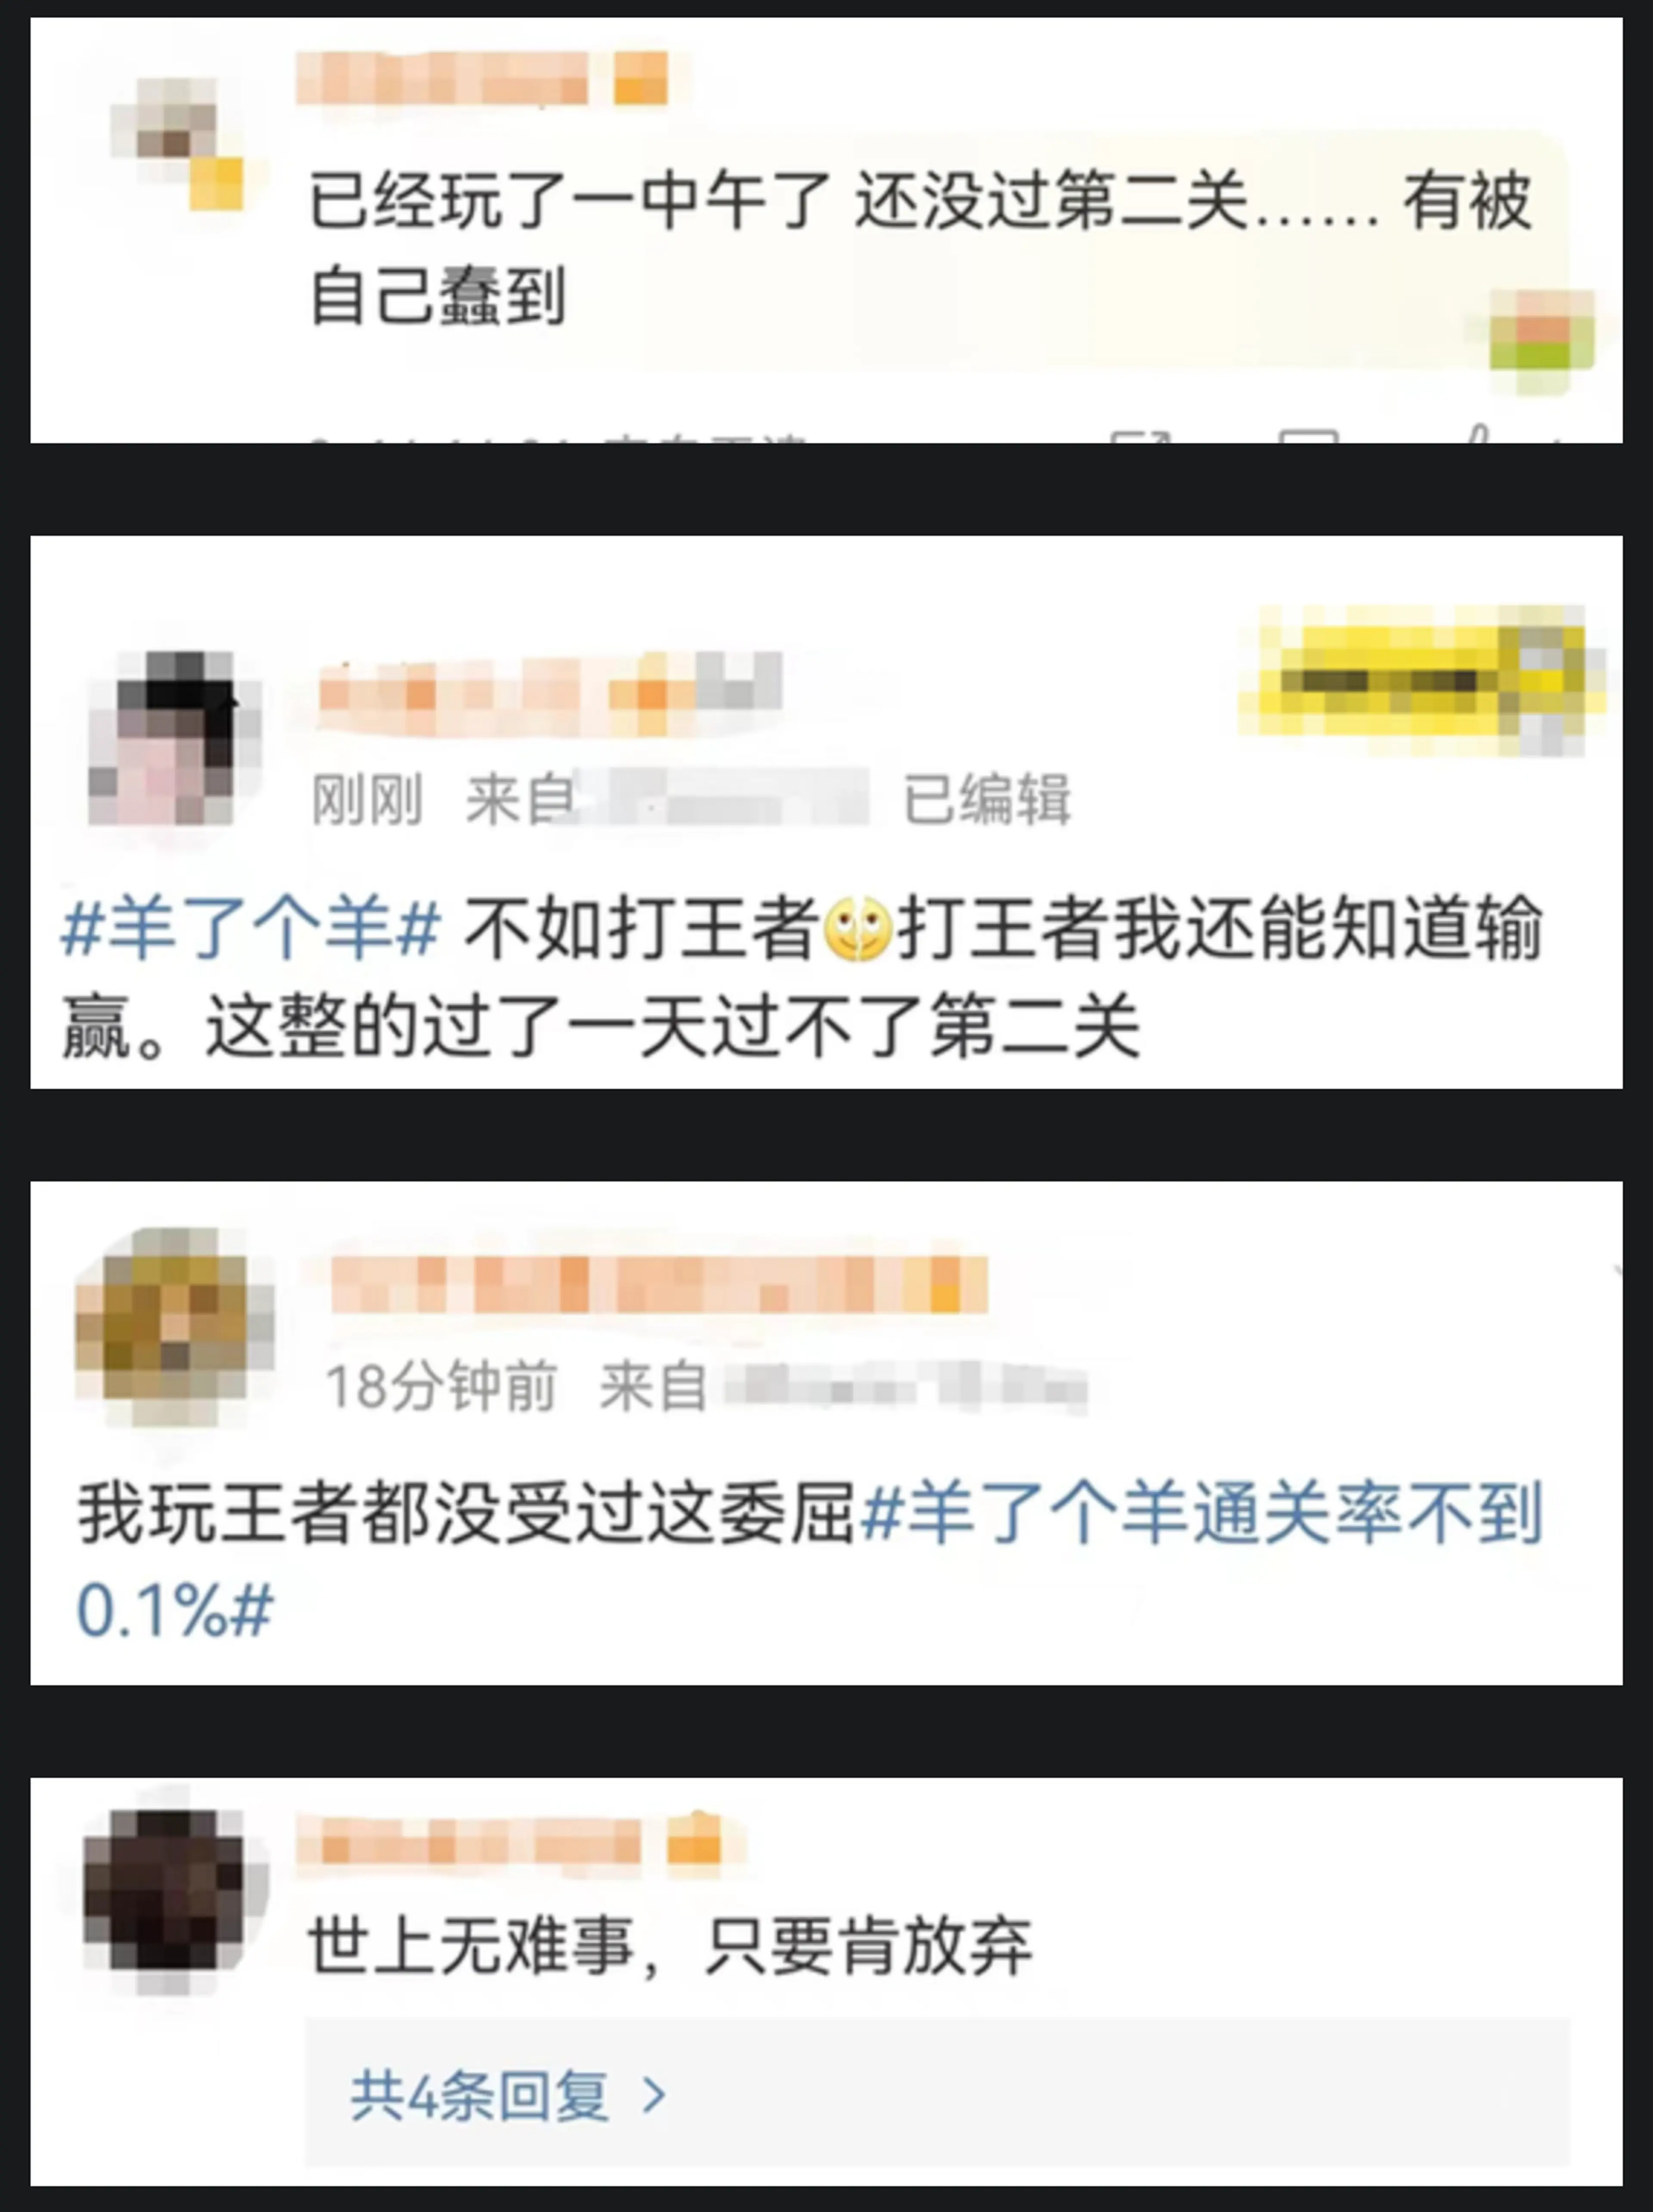 Yangelegeyang Weibo Comments